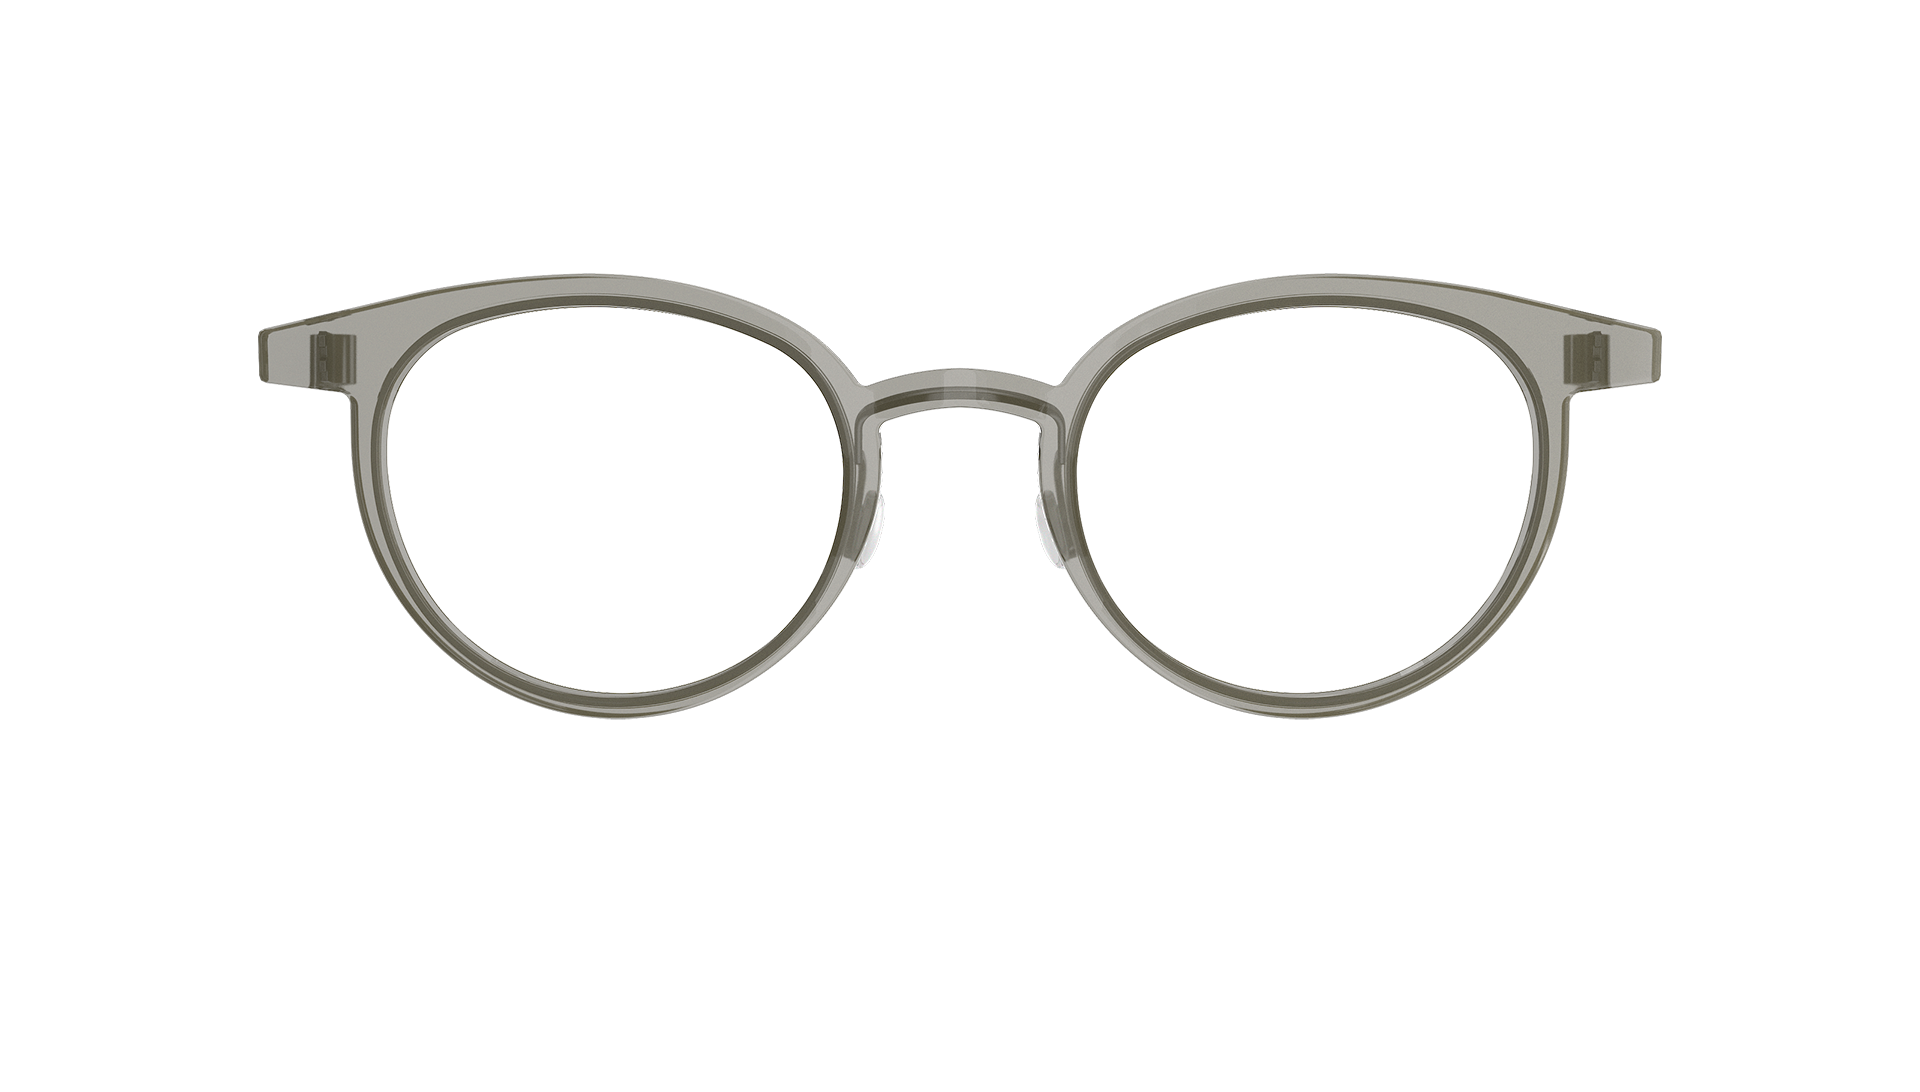 LINDBERG acetanium, Modell 1040 AI65, Brille mit Acetatfassung in Transparent-Grau in klassischer Panto-Form